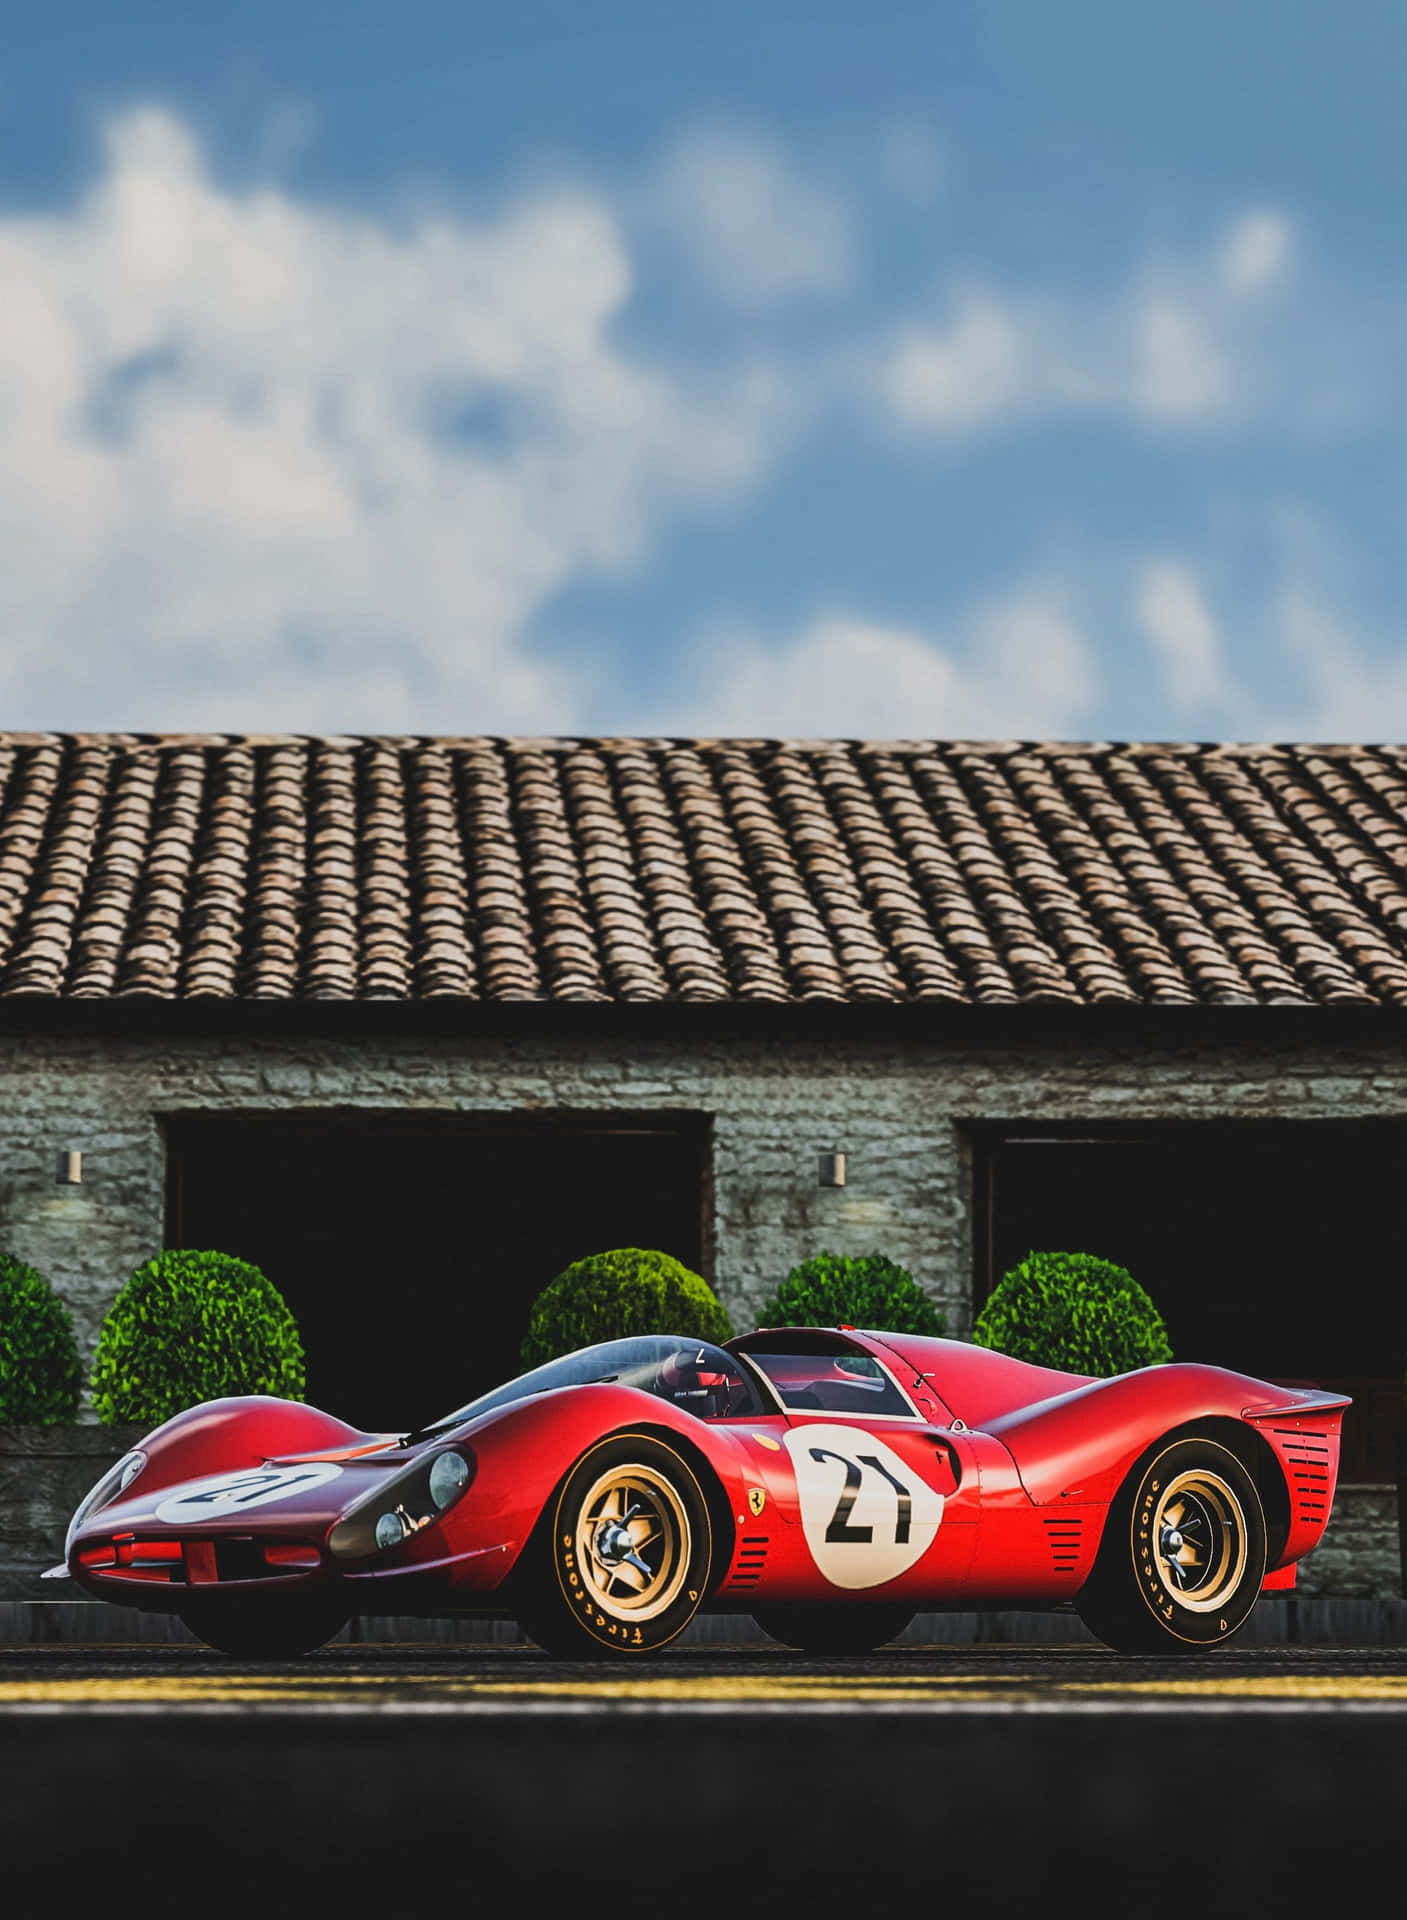 Ferrari 330 Aerodynamic Body Wallpaper